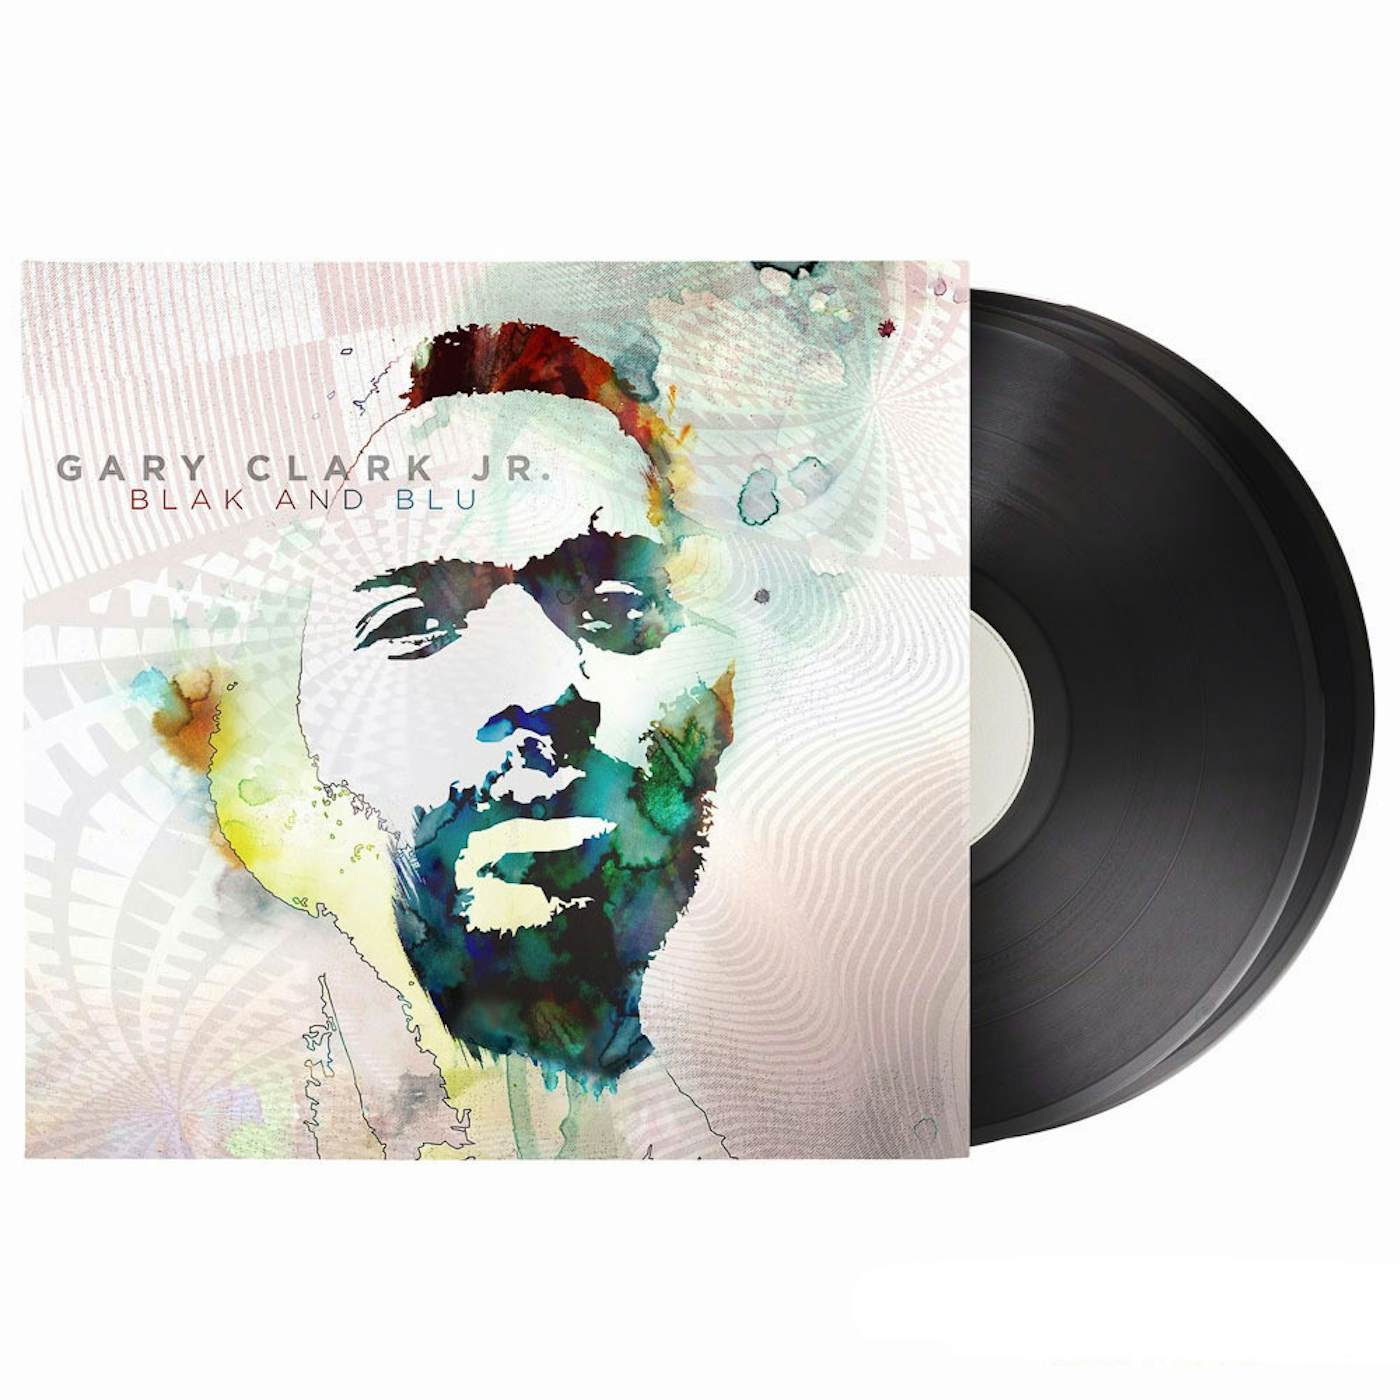 Gary Clark Jr. Blak And Blu Vinyl Record